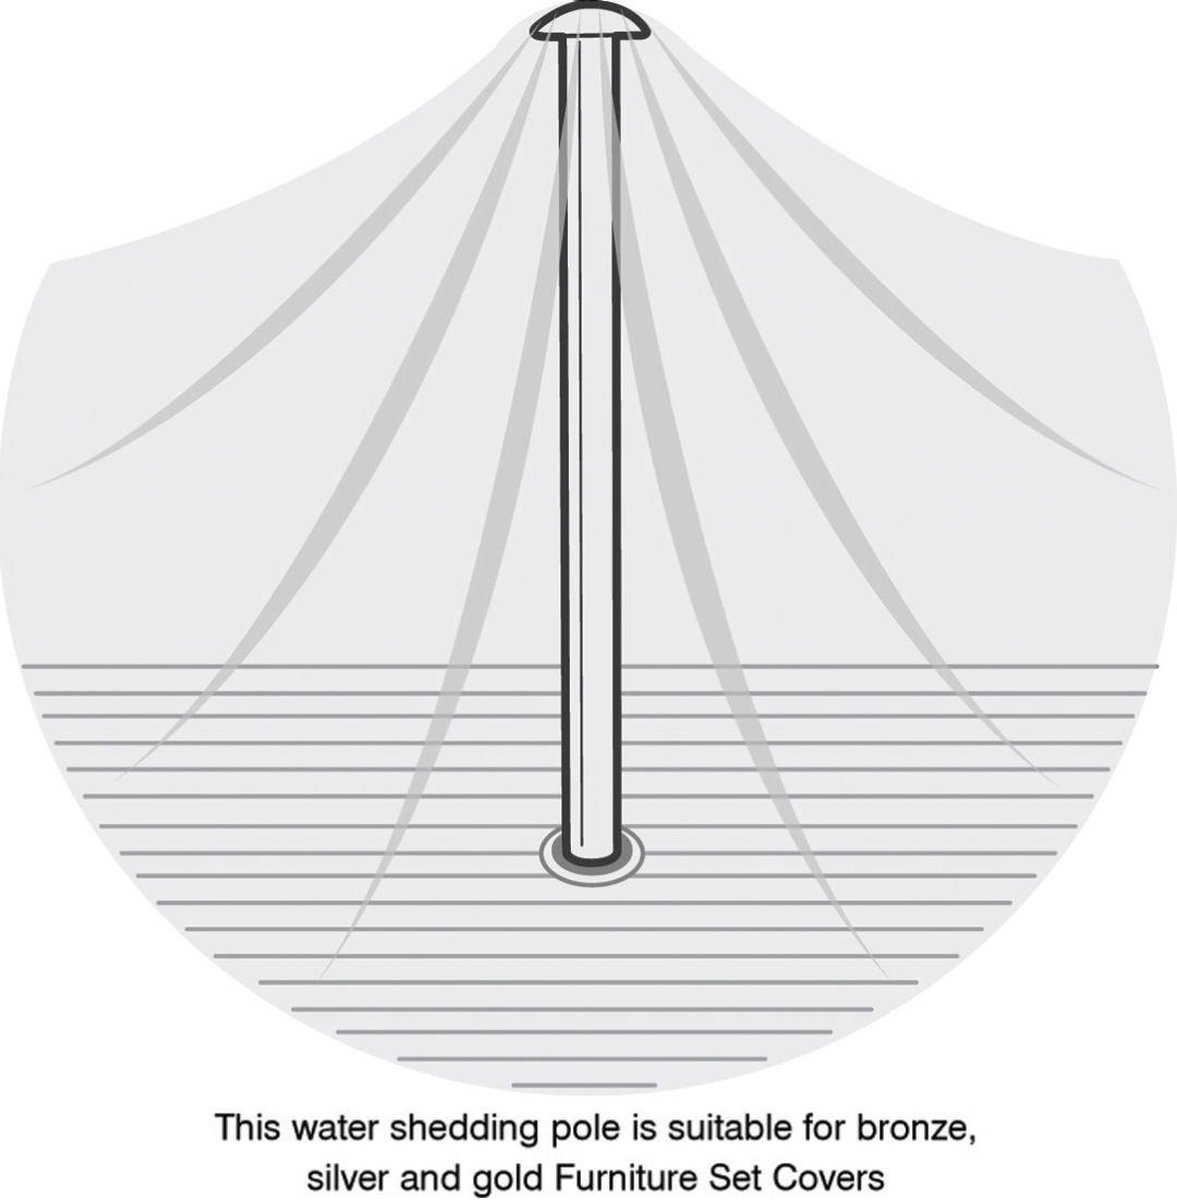 Garland Afwaterpaal voor Hoes (lengte 129cm) - Staal - - Brons